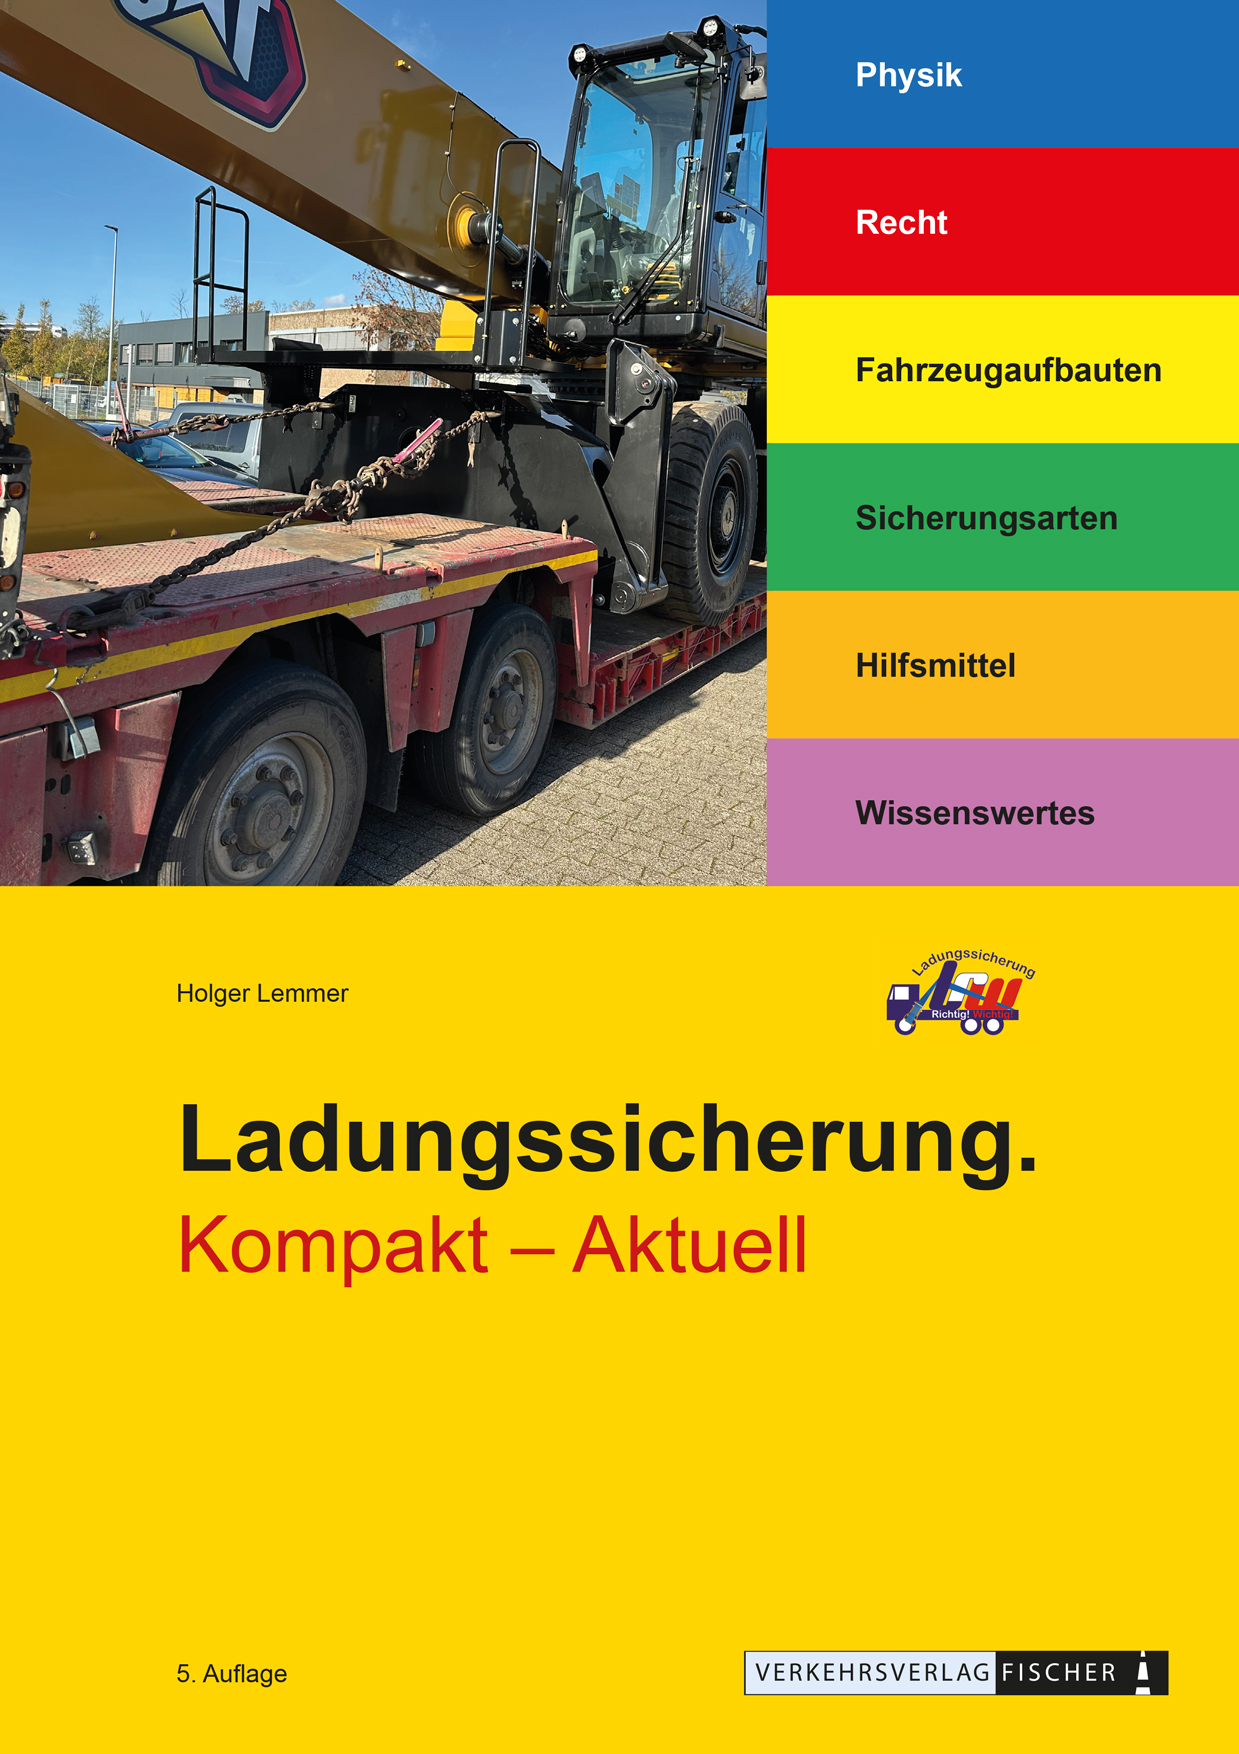 Verkehrsverlag J. Fischer - Ladungssicherung Kompakt Niederzurren